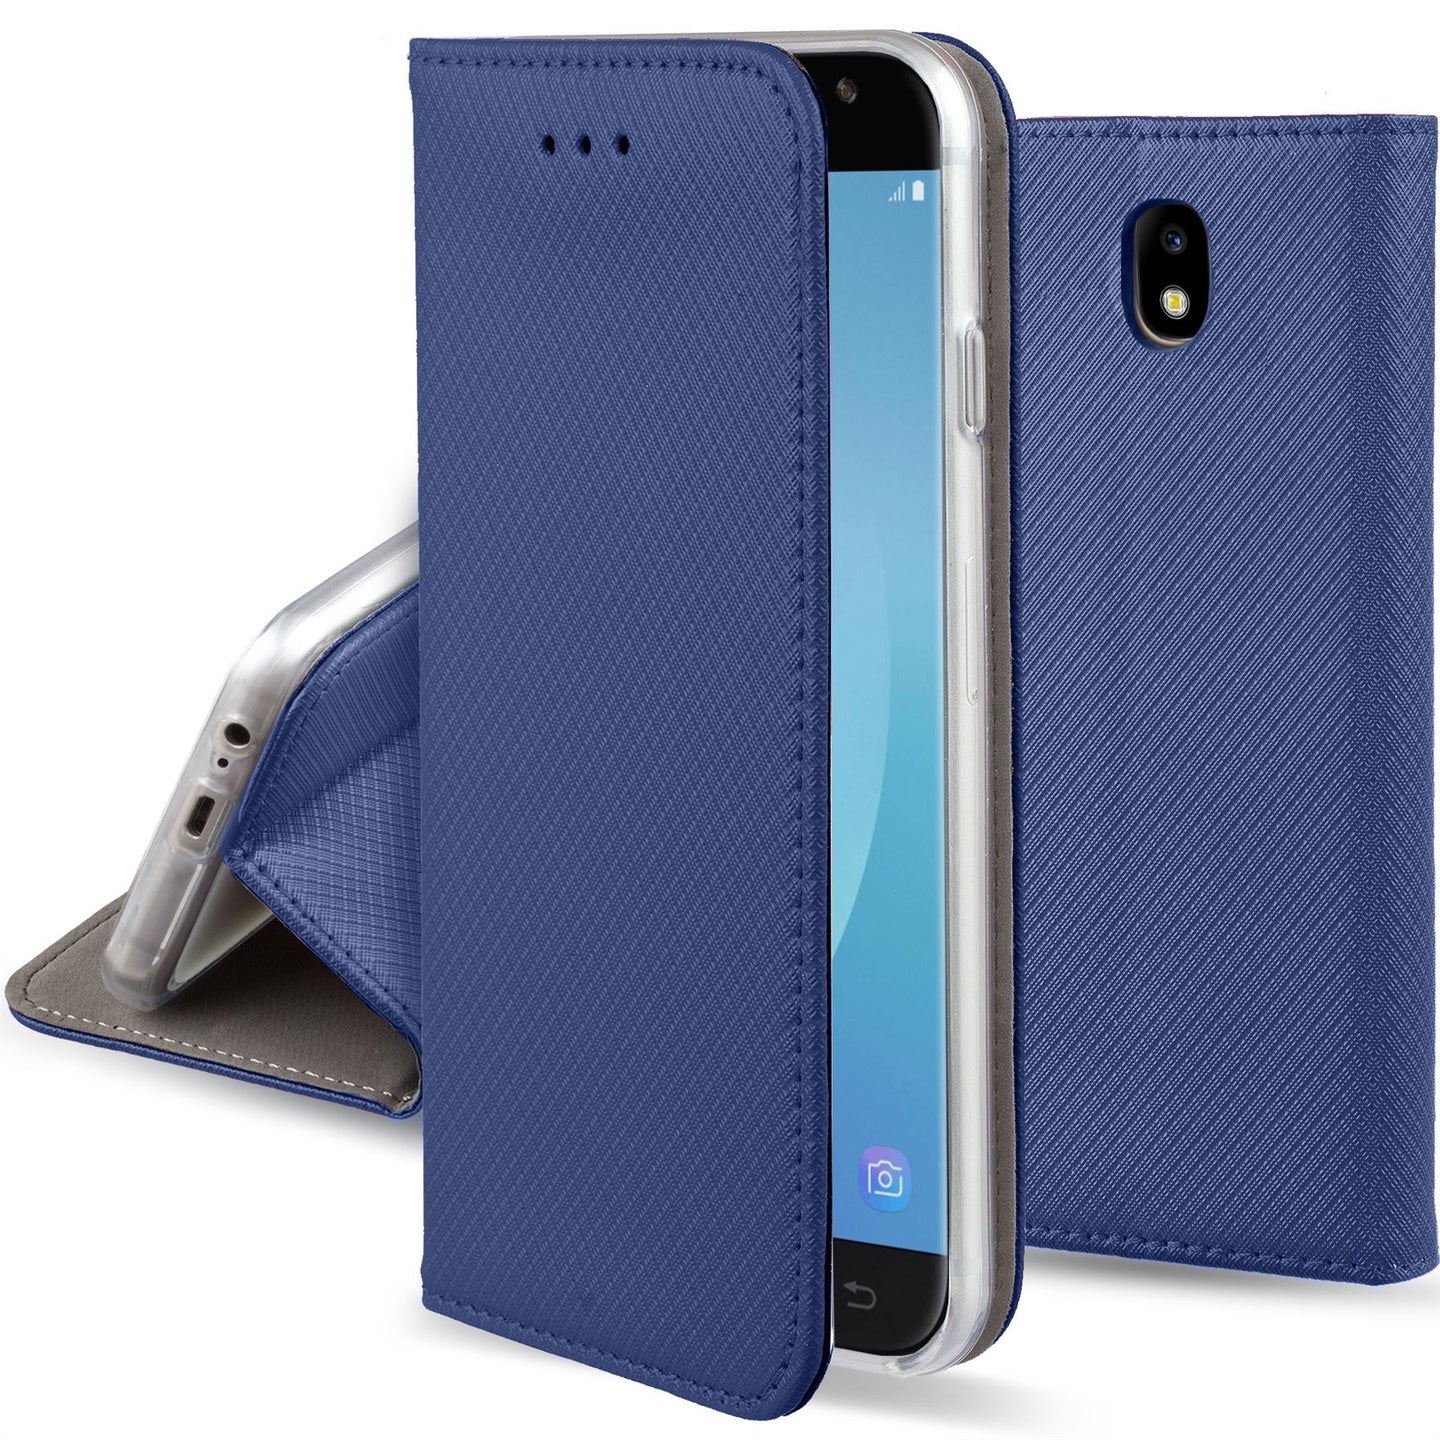 Moozy Case Flip Cover for Samsung J3 2017, Dark Blue - Smart Magnetic Flip Case with Card Holder and Stand